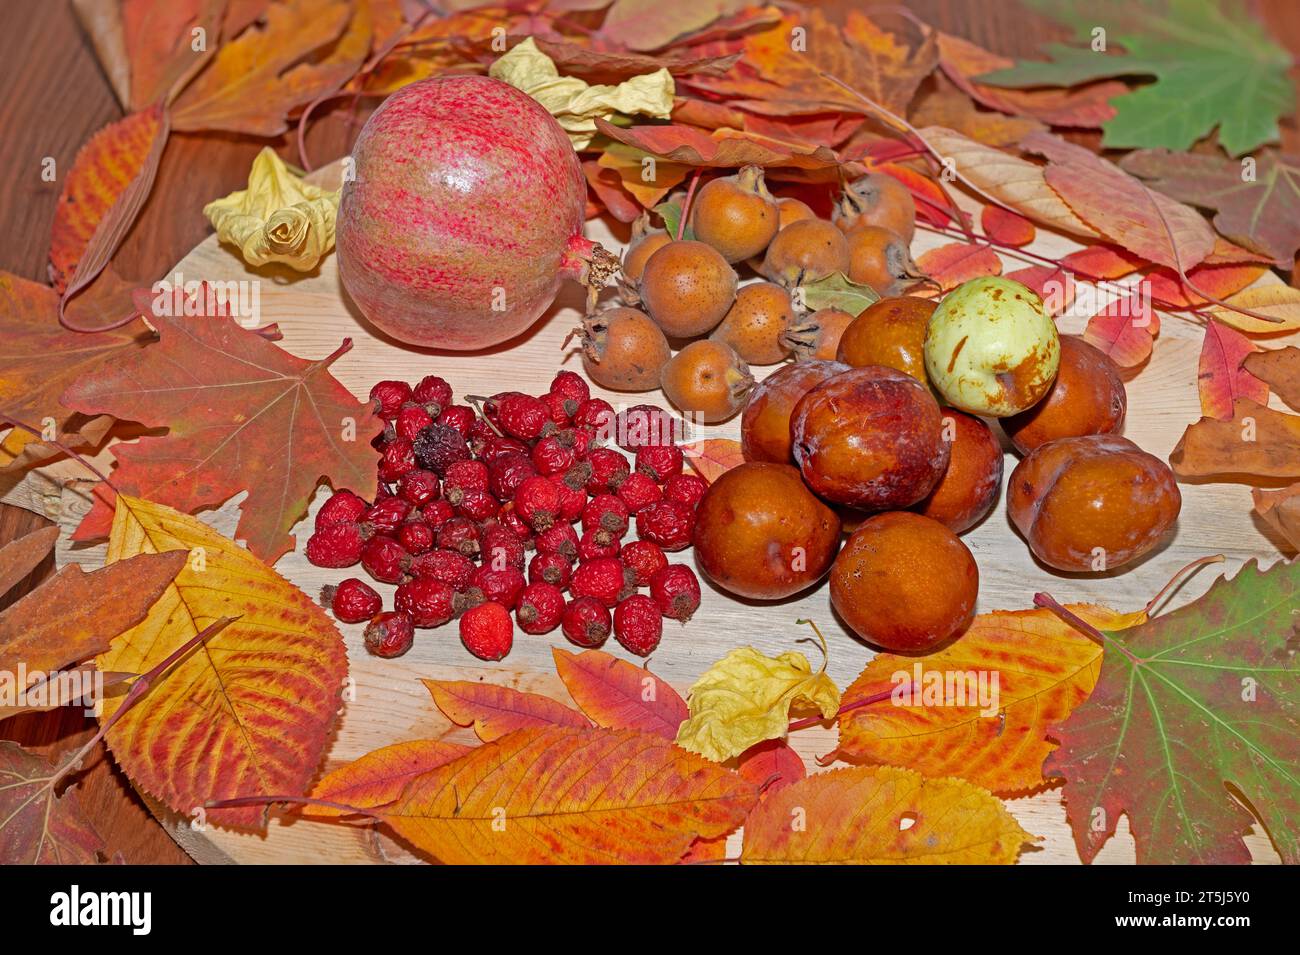 Fresh ripe organic medlar fruit, rose hips and pomegranate on wood and among autumn leaves. Stock Photo